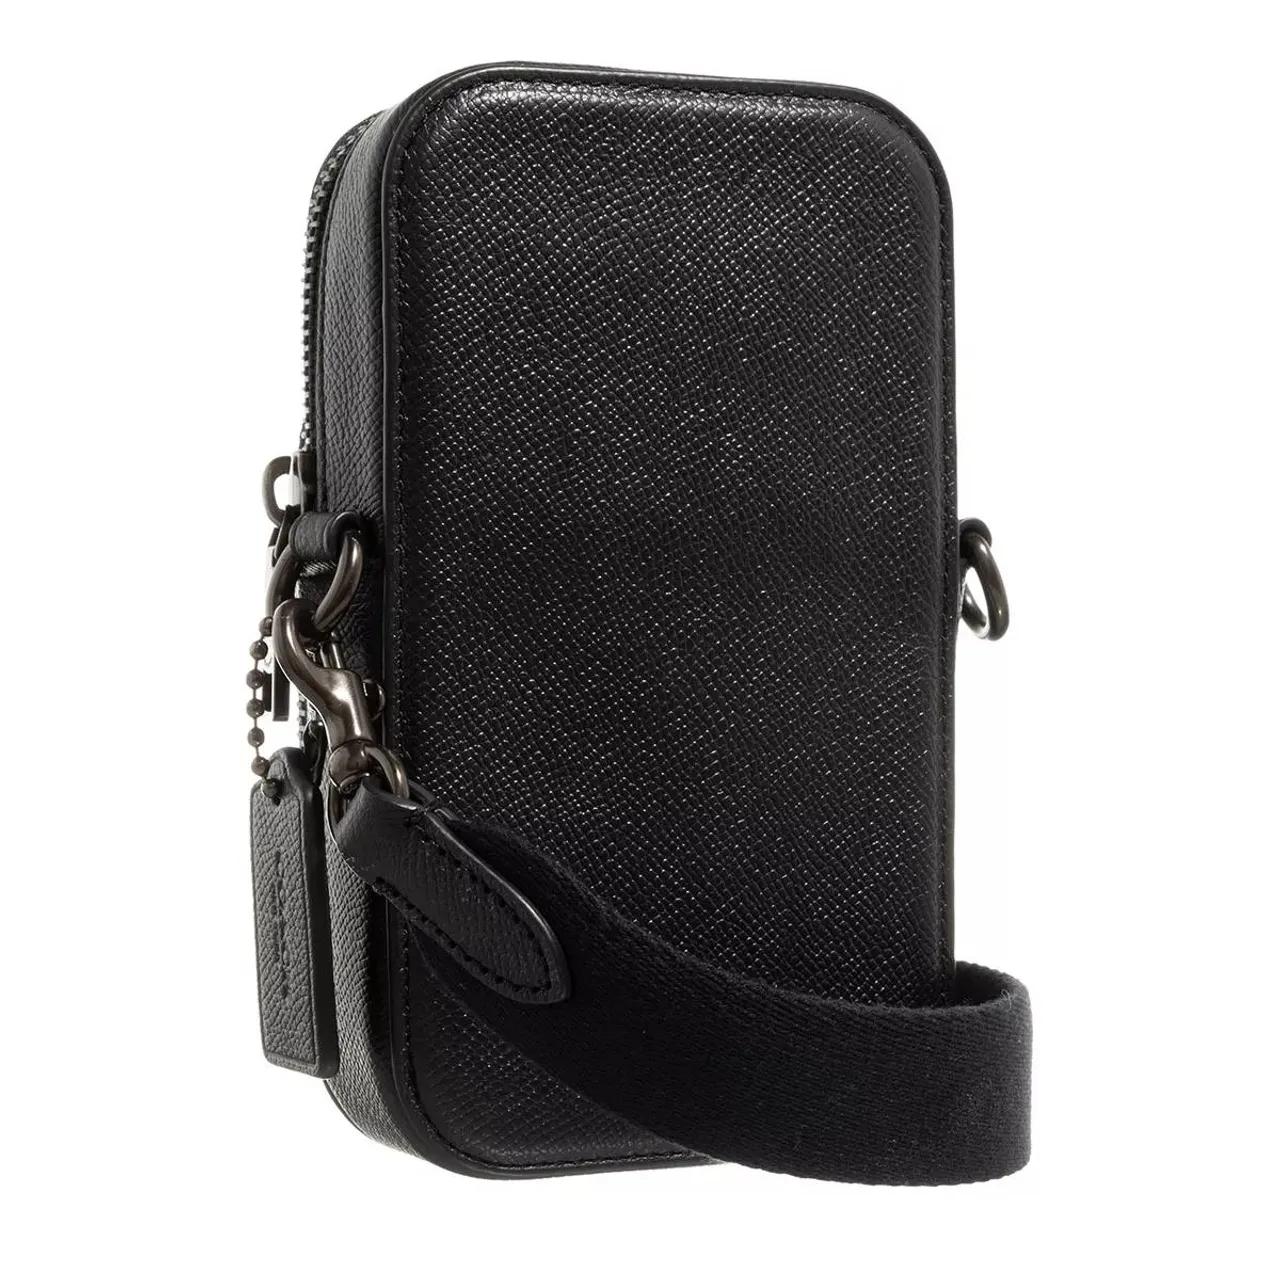 Coach Crossbody Bags - Phone Crossbody In Crossgrain Leather - black - Crossbody Bags for ladies